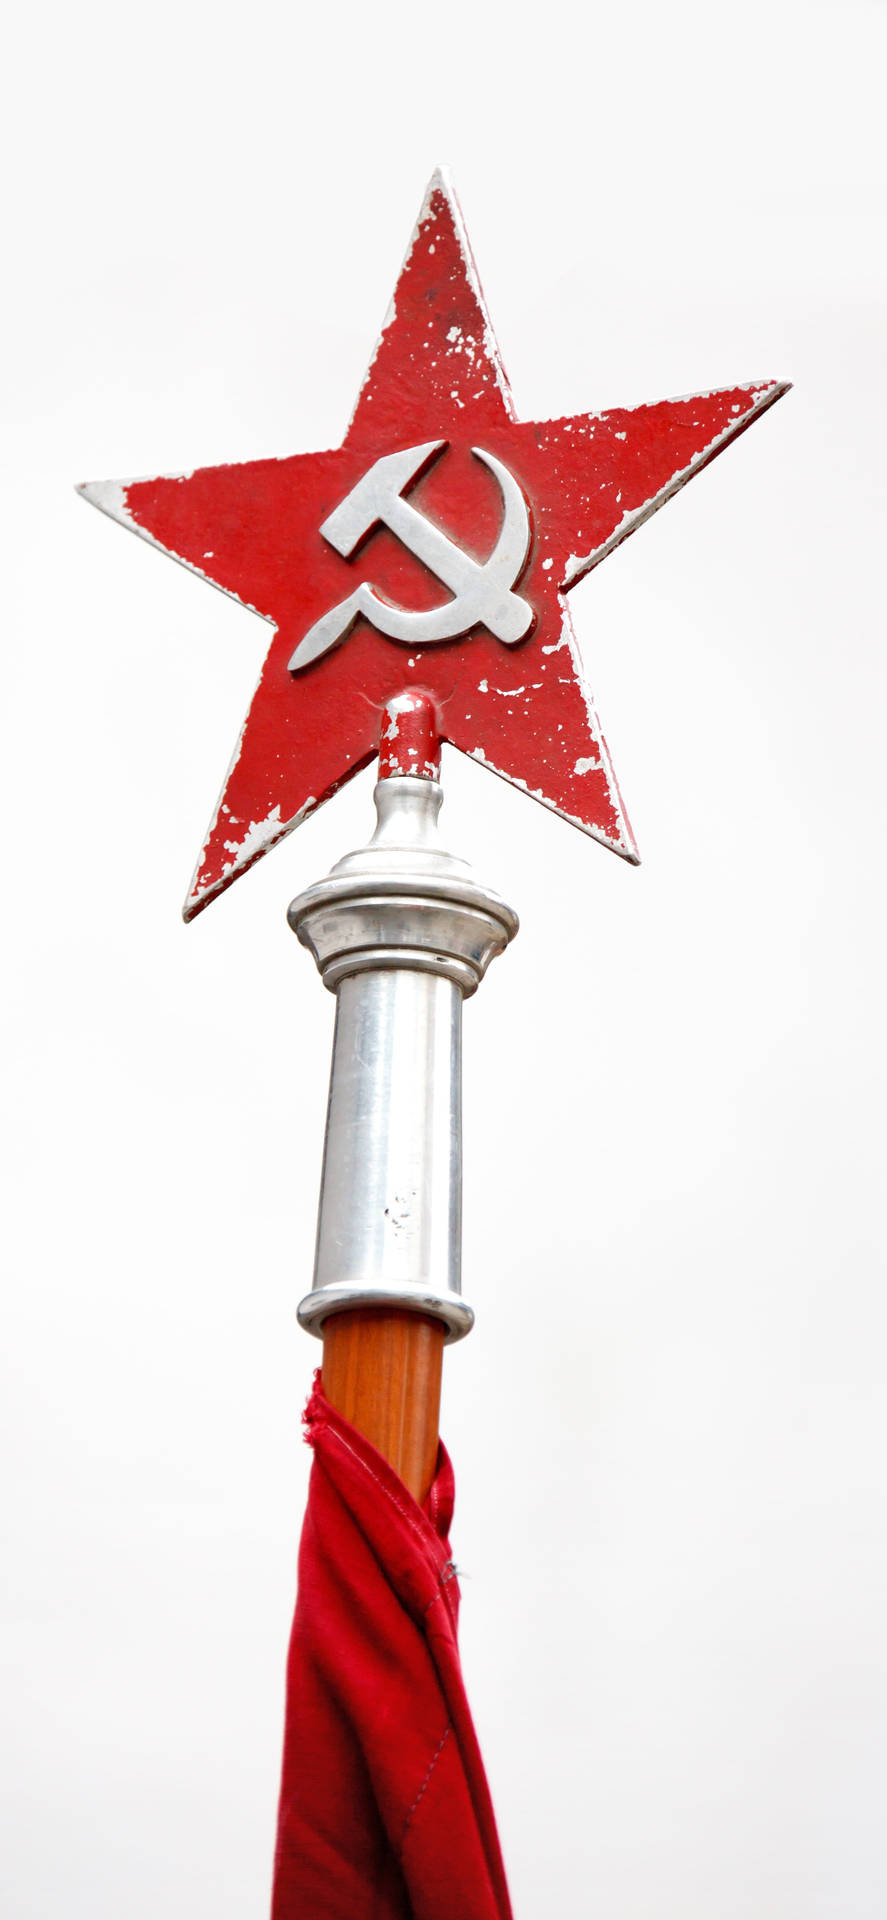 Illuminated Red Star On Tower Signage At Night